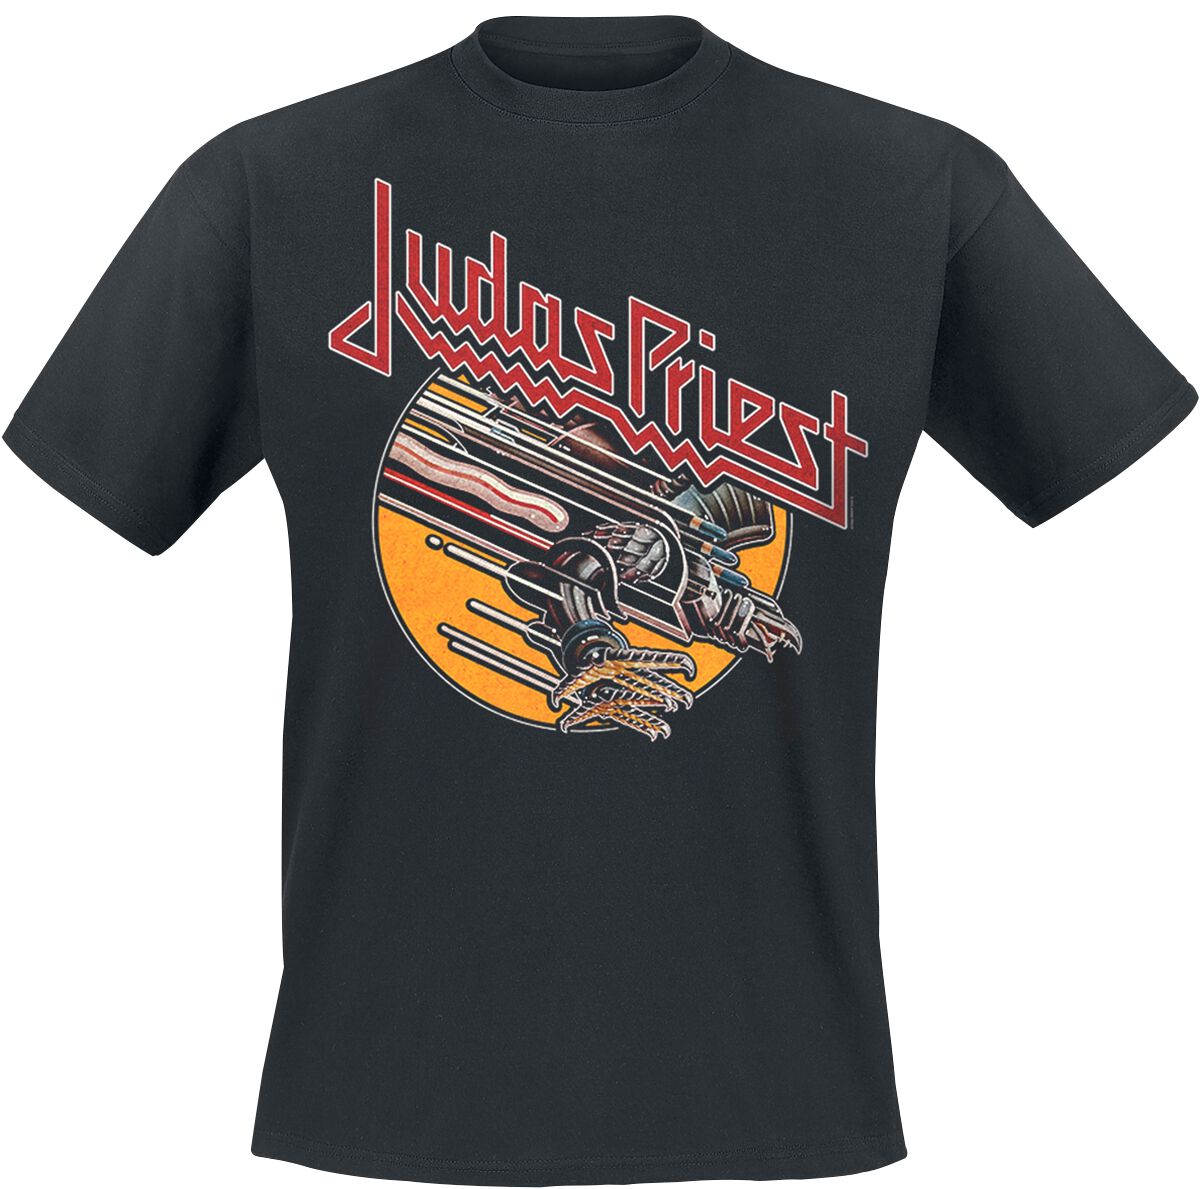 Judas Priest Graphic Circle T-Shirt black